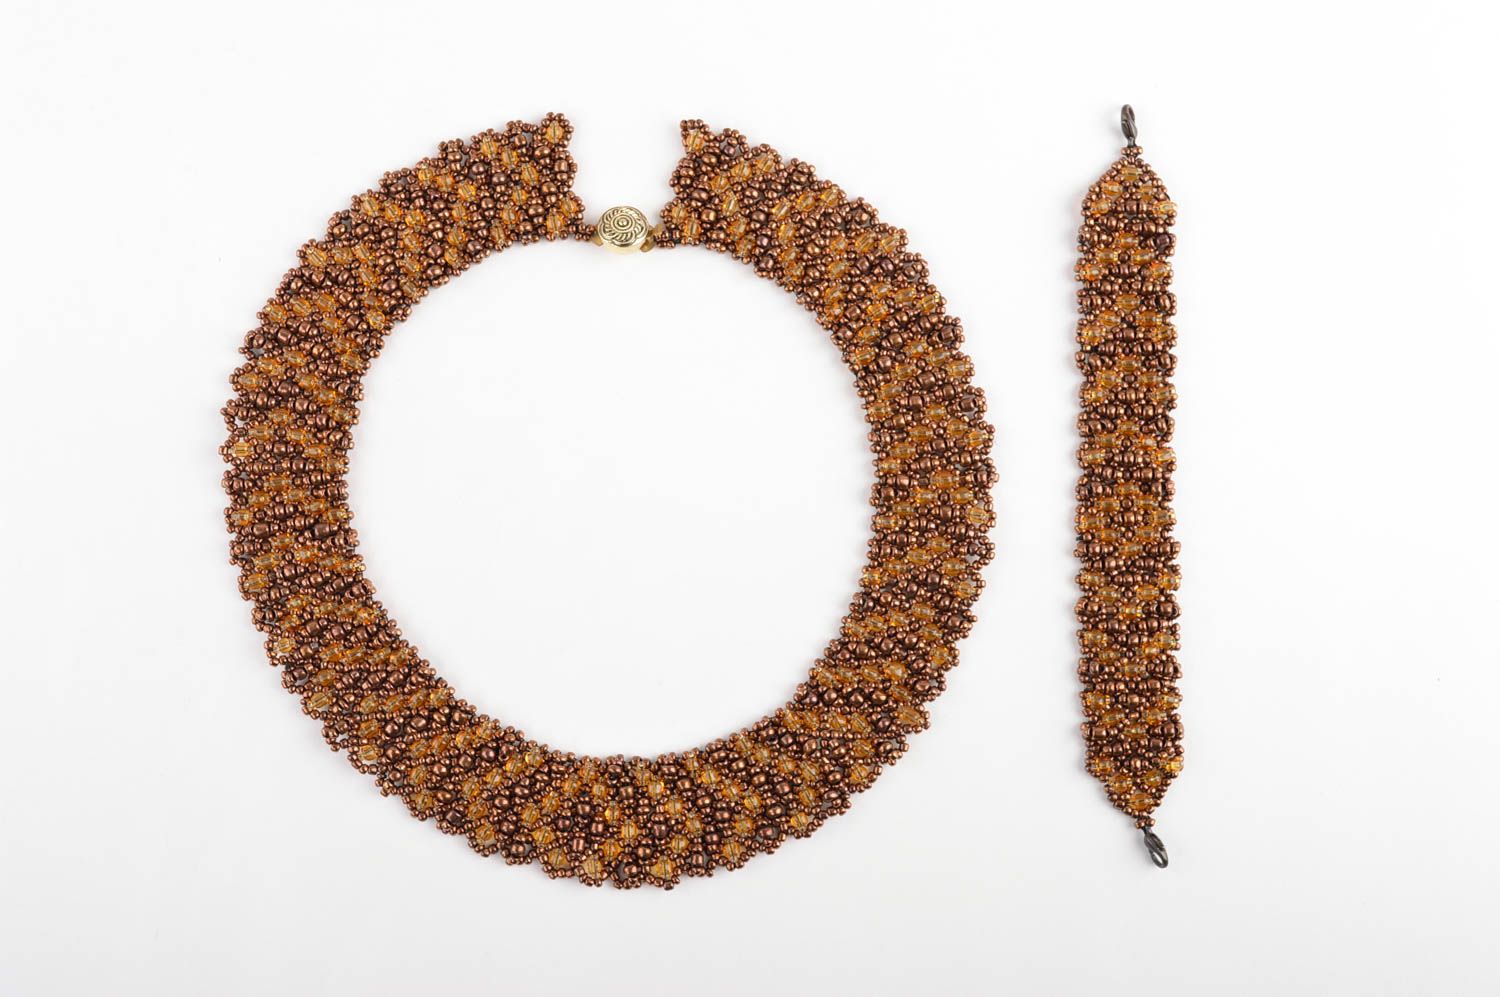 Handmade beaded necklace wrist bracelet designs costume jewelry set ideas photo 2